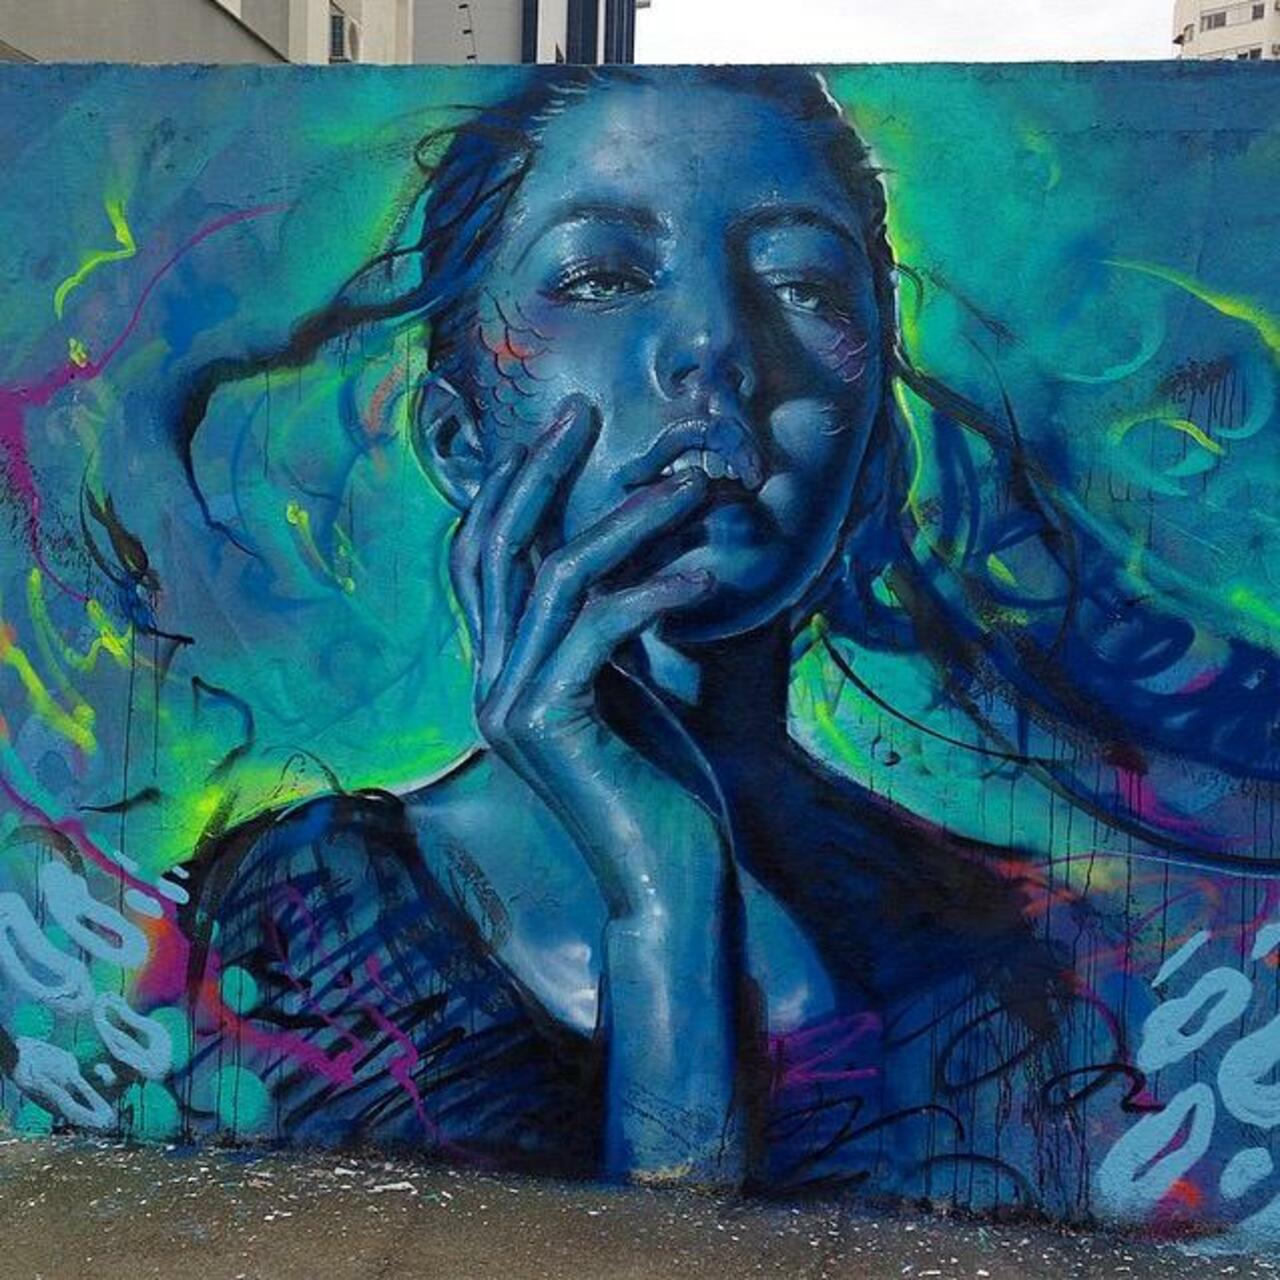 Thiago Valdi new Street Art piece titled 'Day Dreamer'

#art #mural #graffiti #streetart http://t.co/LfP9lyMRox